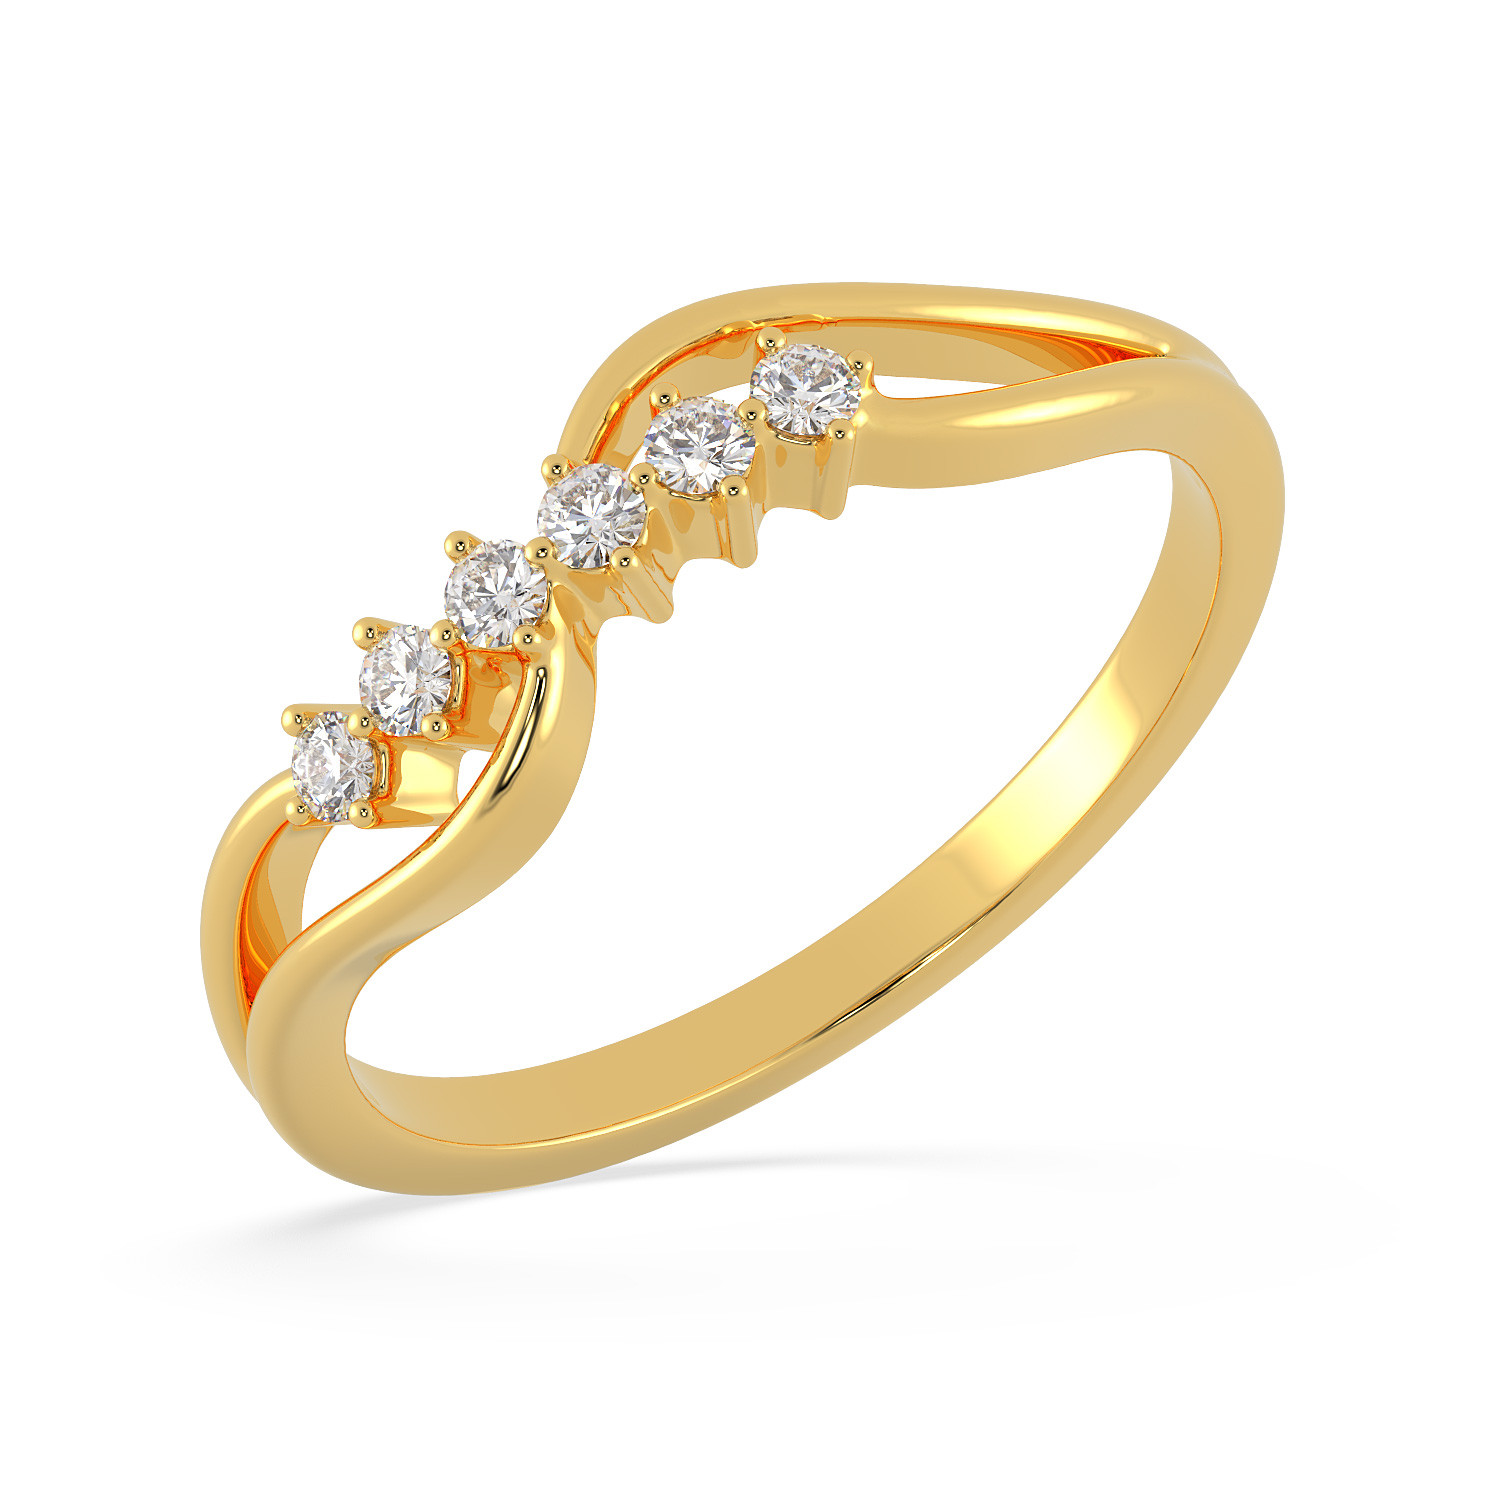 Malabar 22 KT Gold Studded Casual Ring SKYFRDZ084